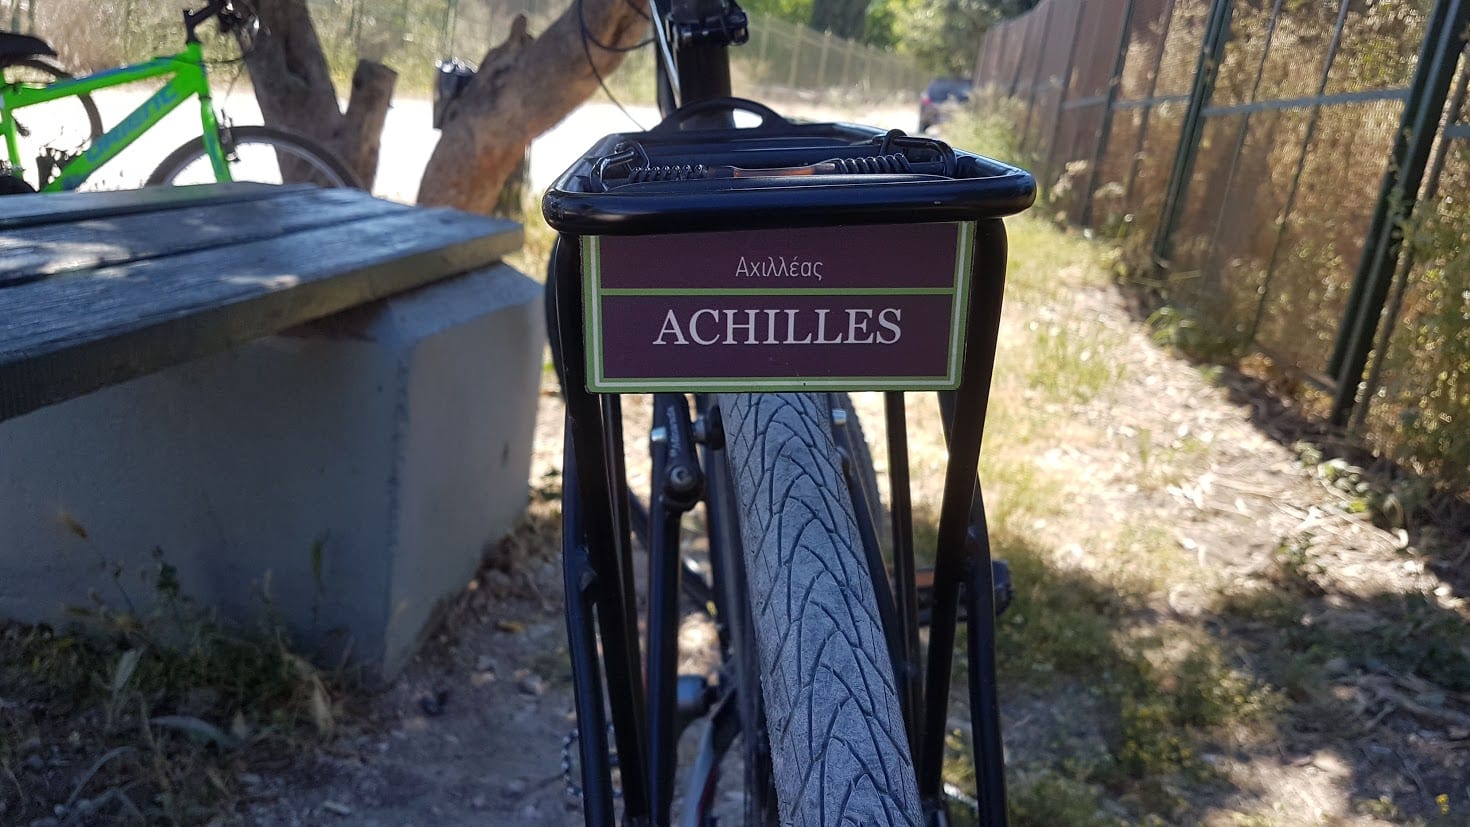 Achilles the bike